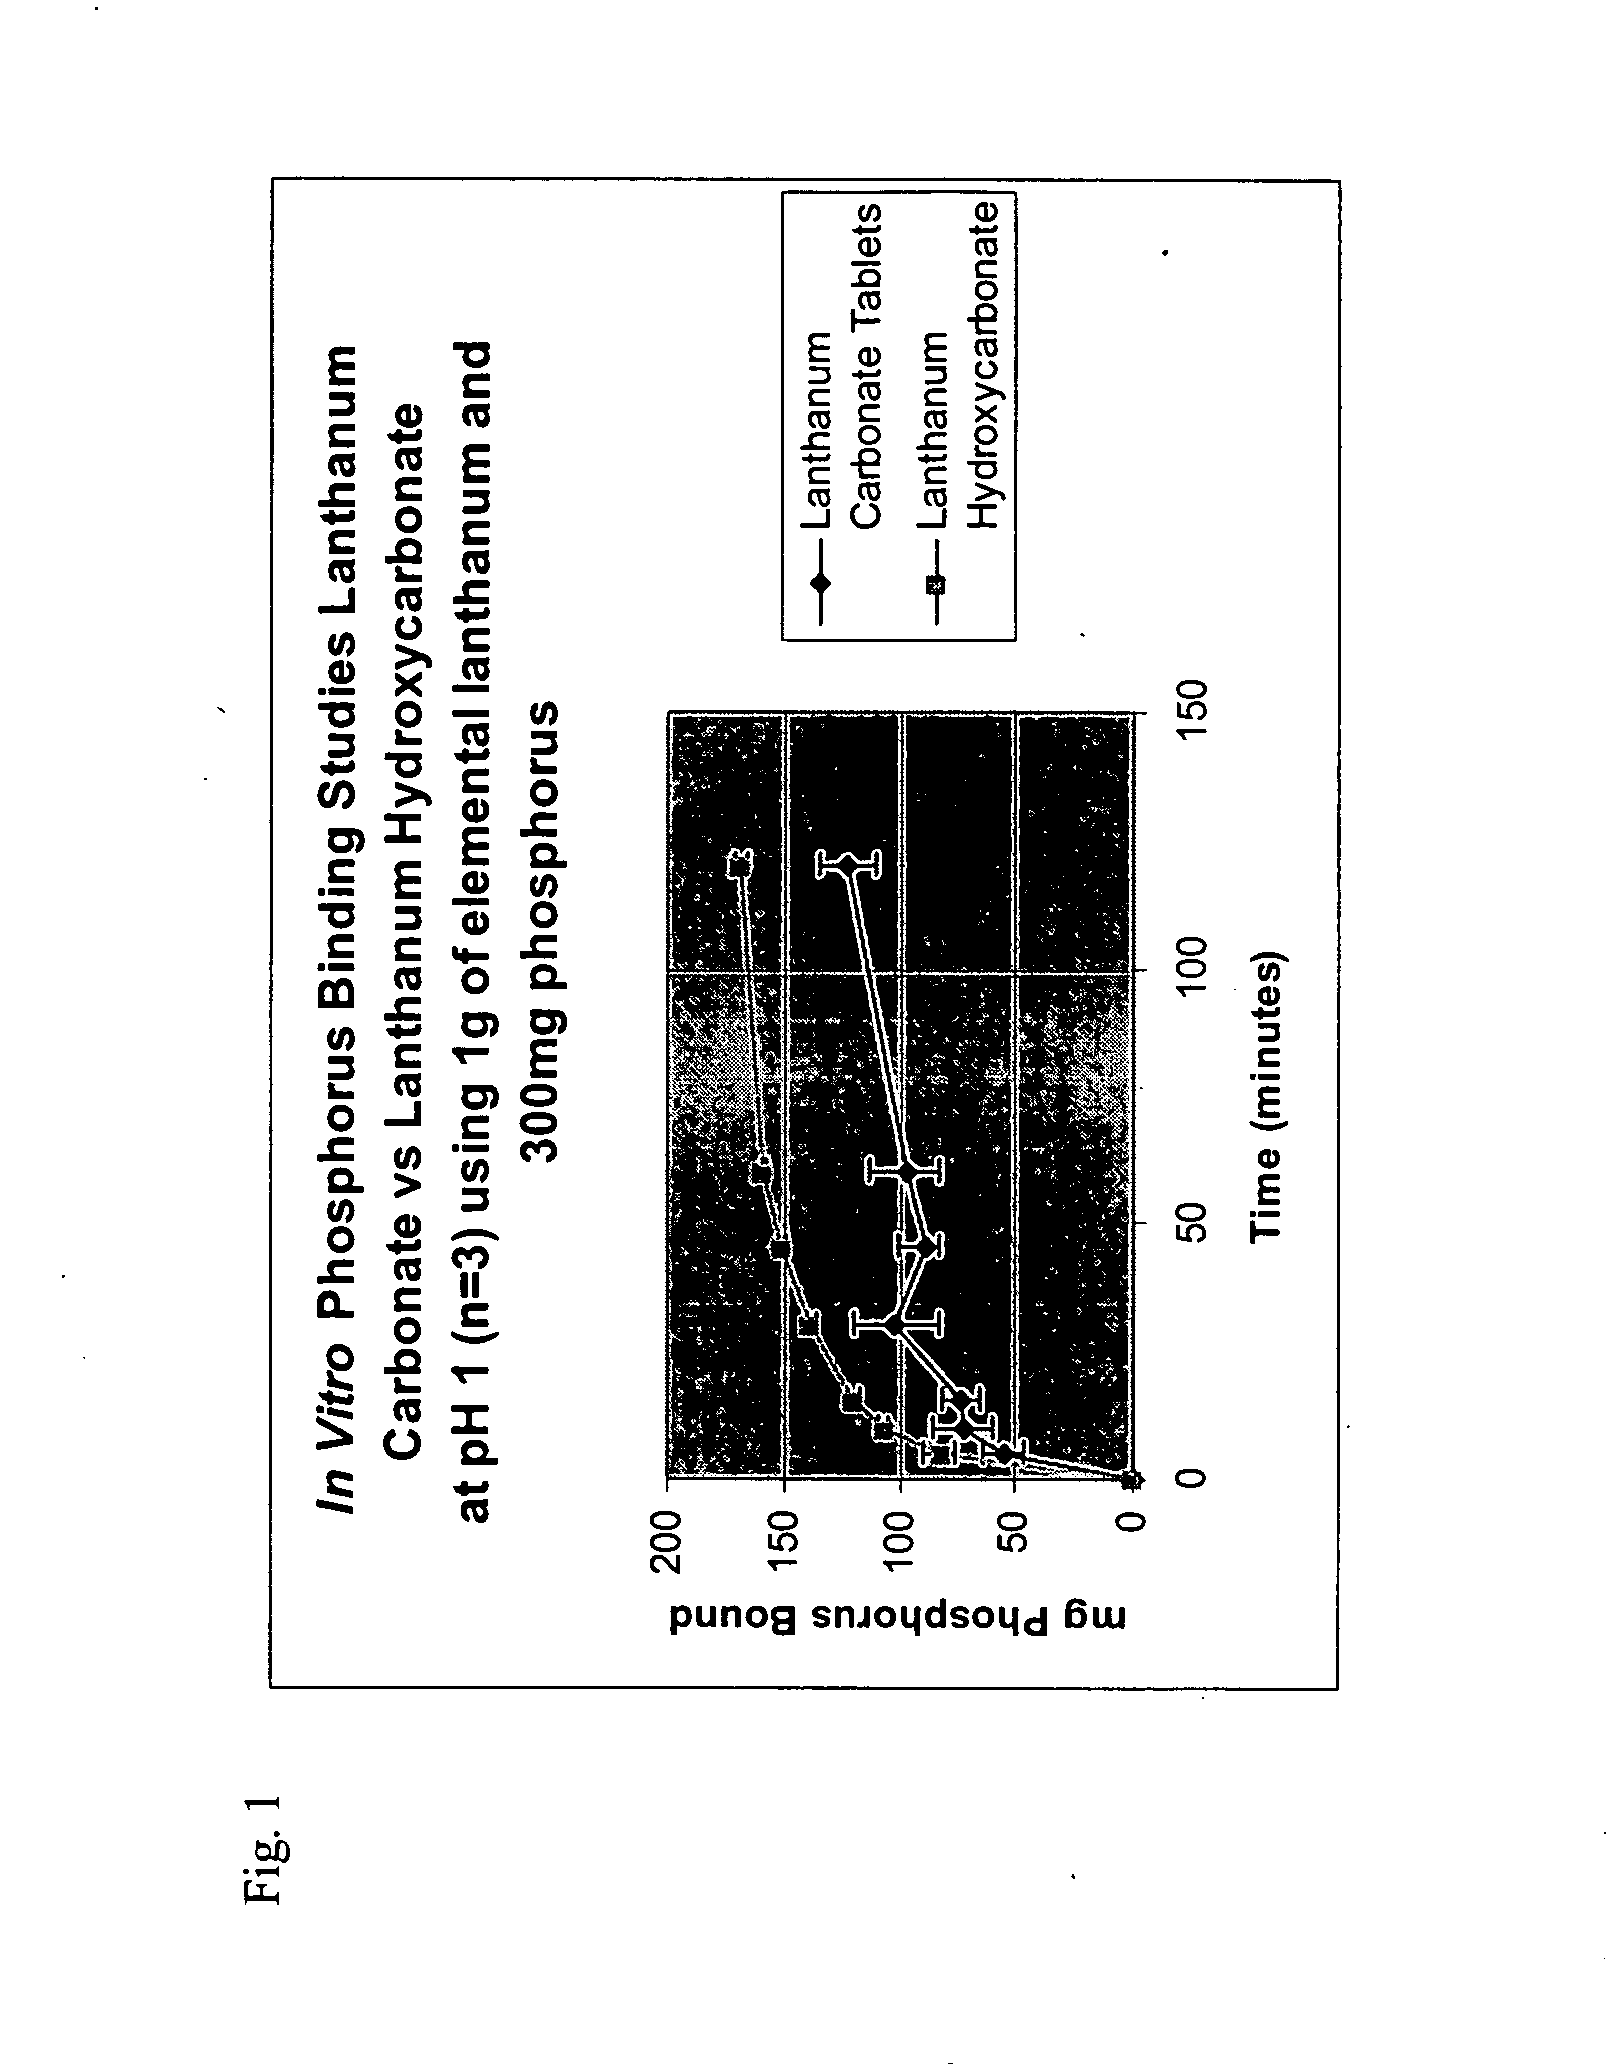 Method of treating hyperphosphataemia using lanthanum hydroxycarbonate